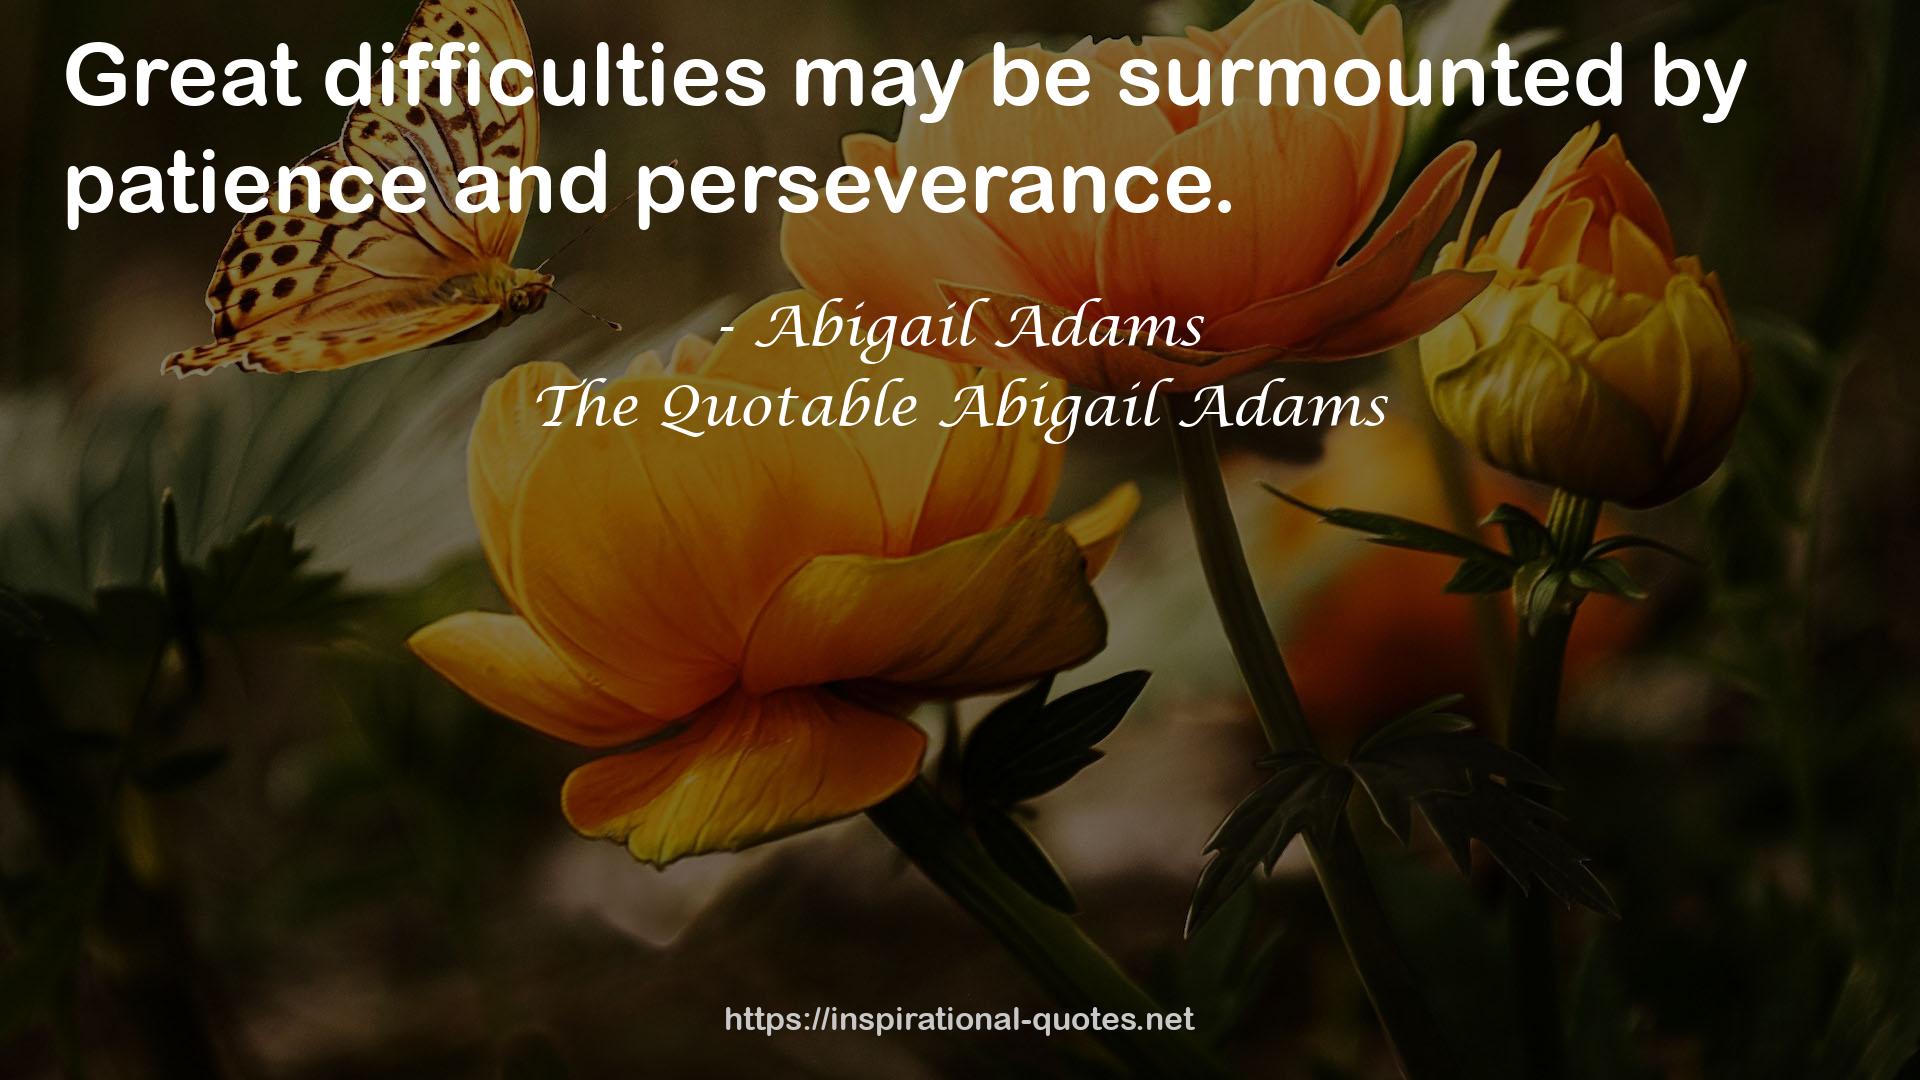 The Quotable Abigail Adams QUOTES